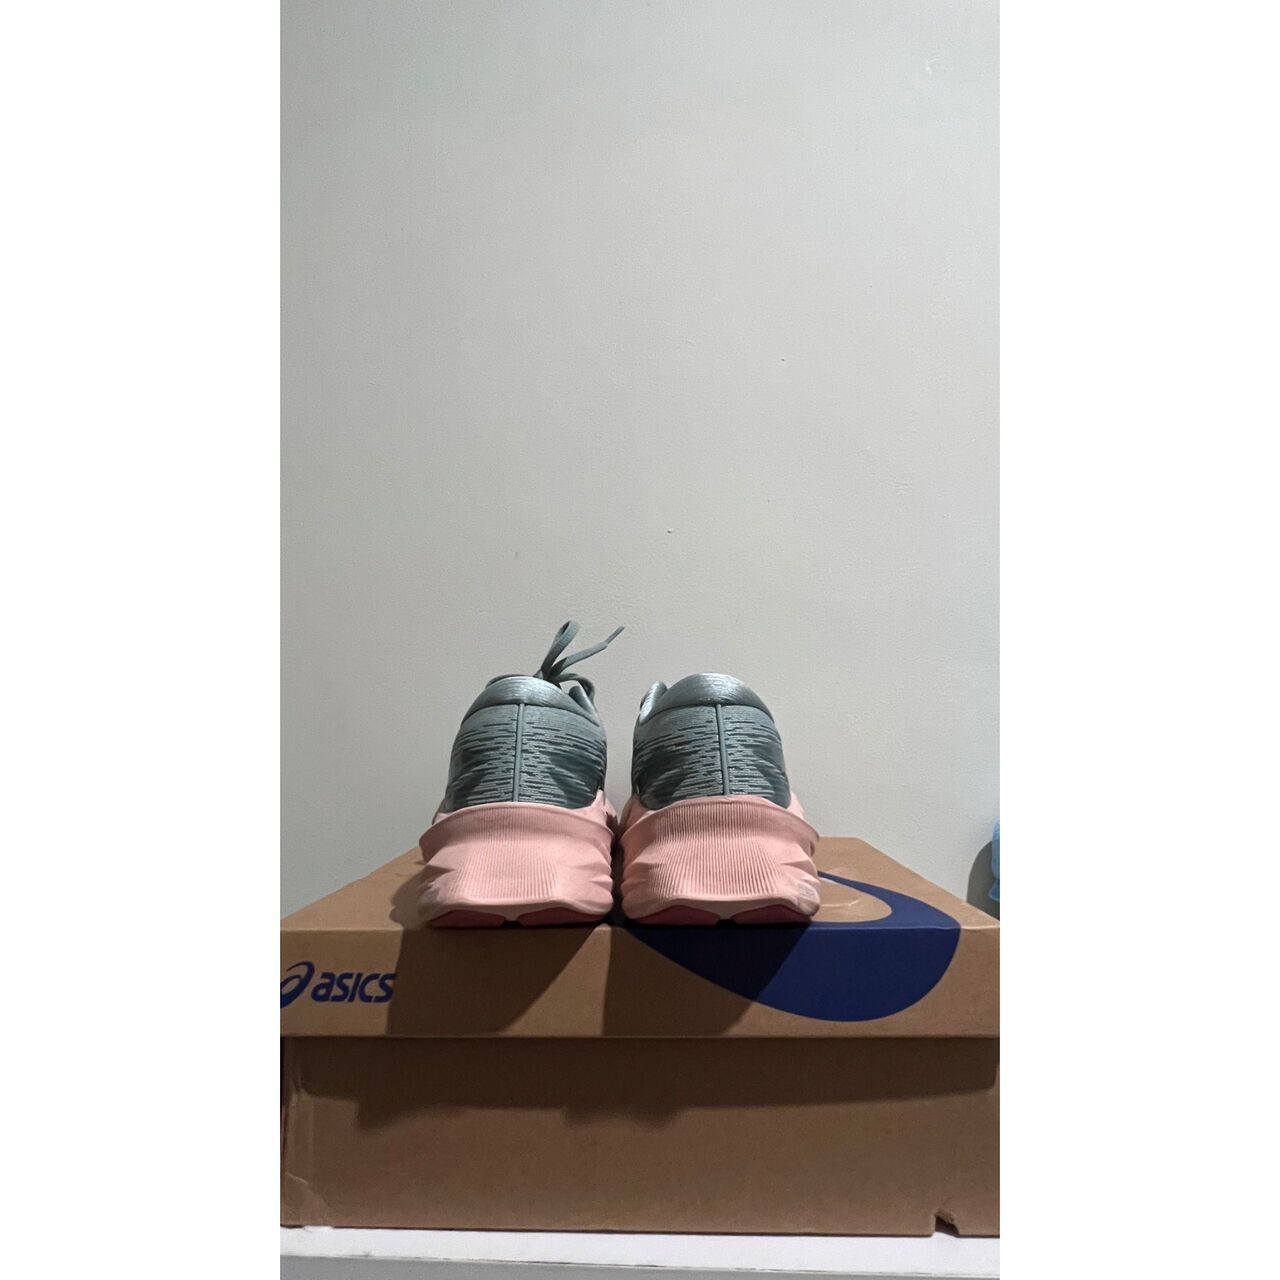 Asics Novablast 3 Pink & Light Blue Running Shoes